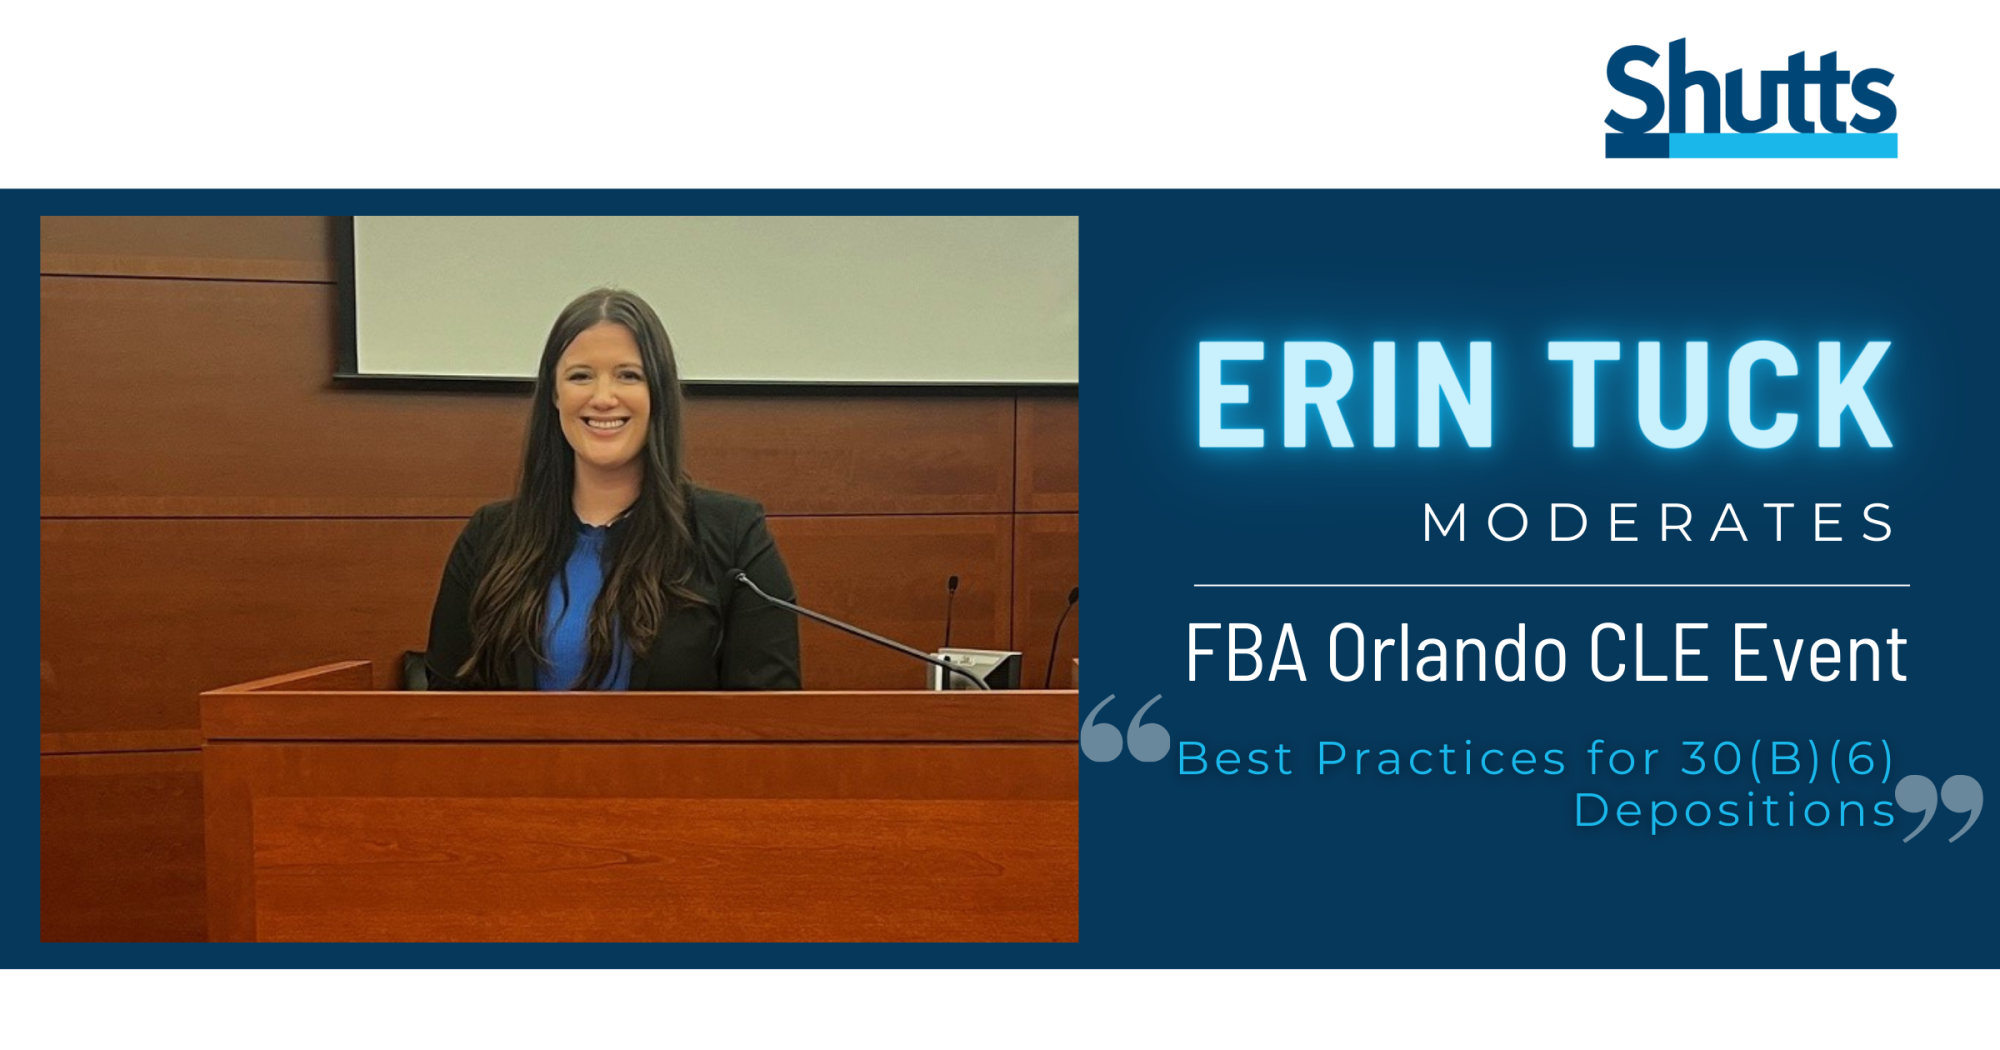 Erin Tuck Moderates FBA Orlando CLE Event